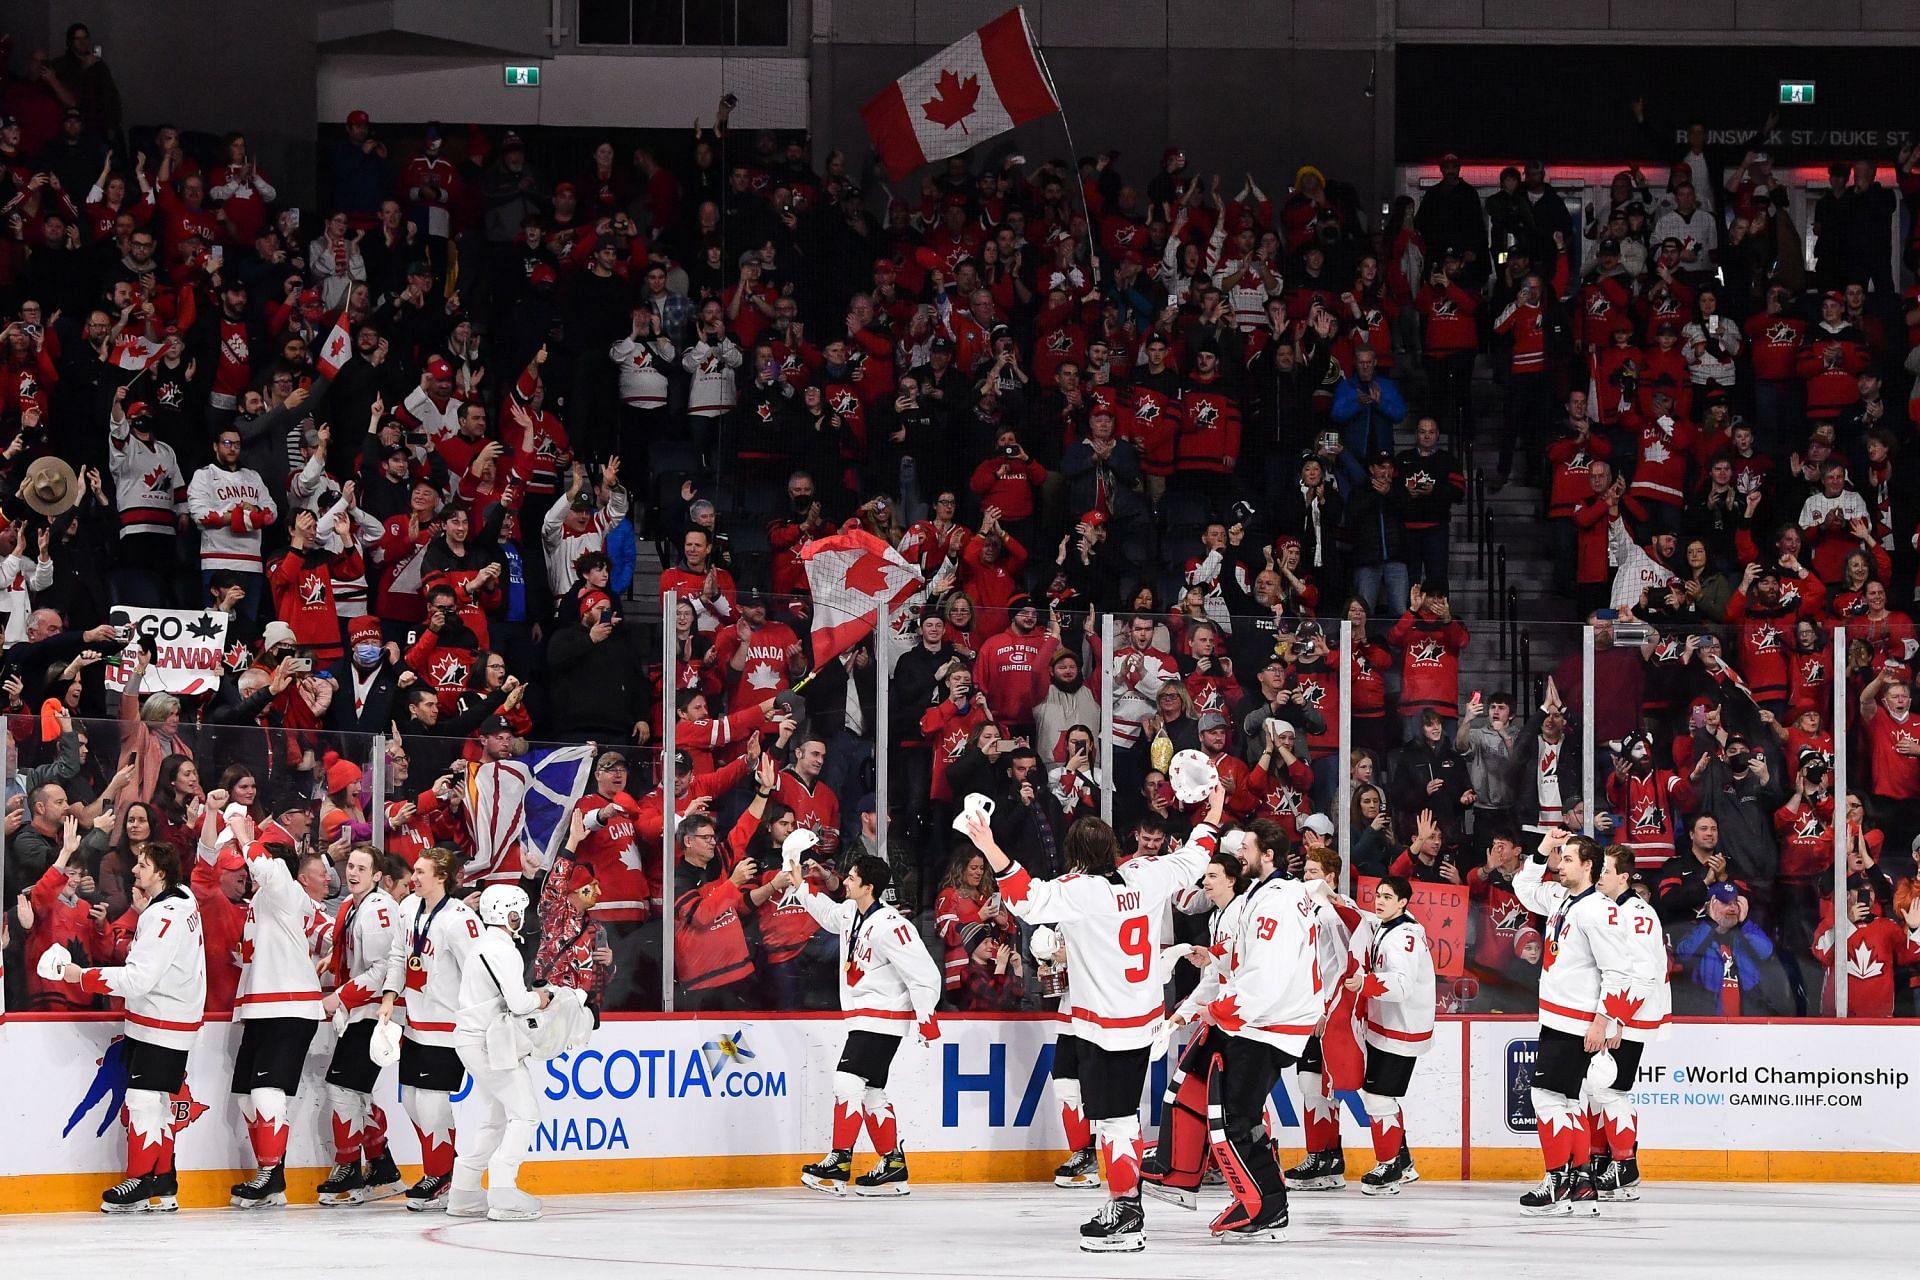 Canada fans debate watching Stanley Cup playoffs over IIHF Worlds